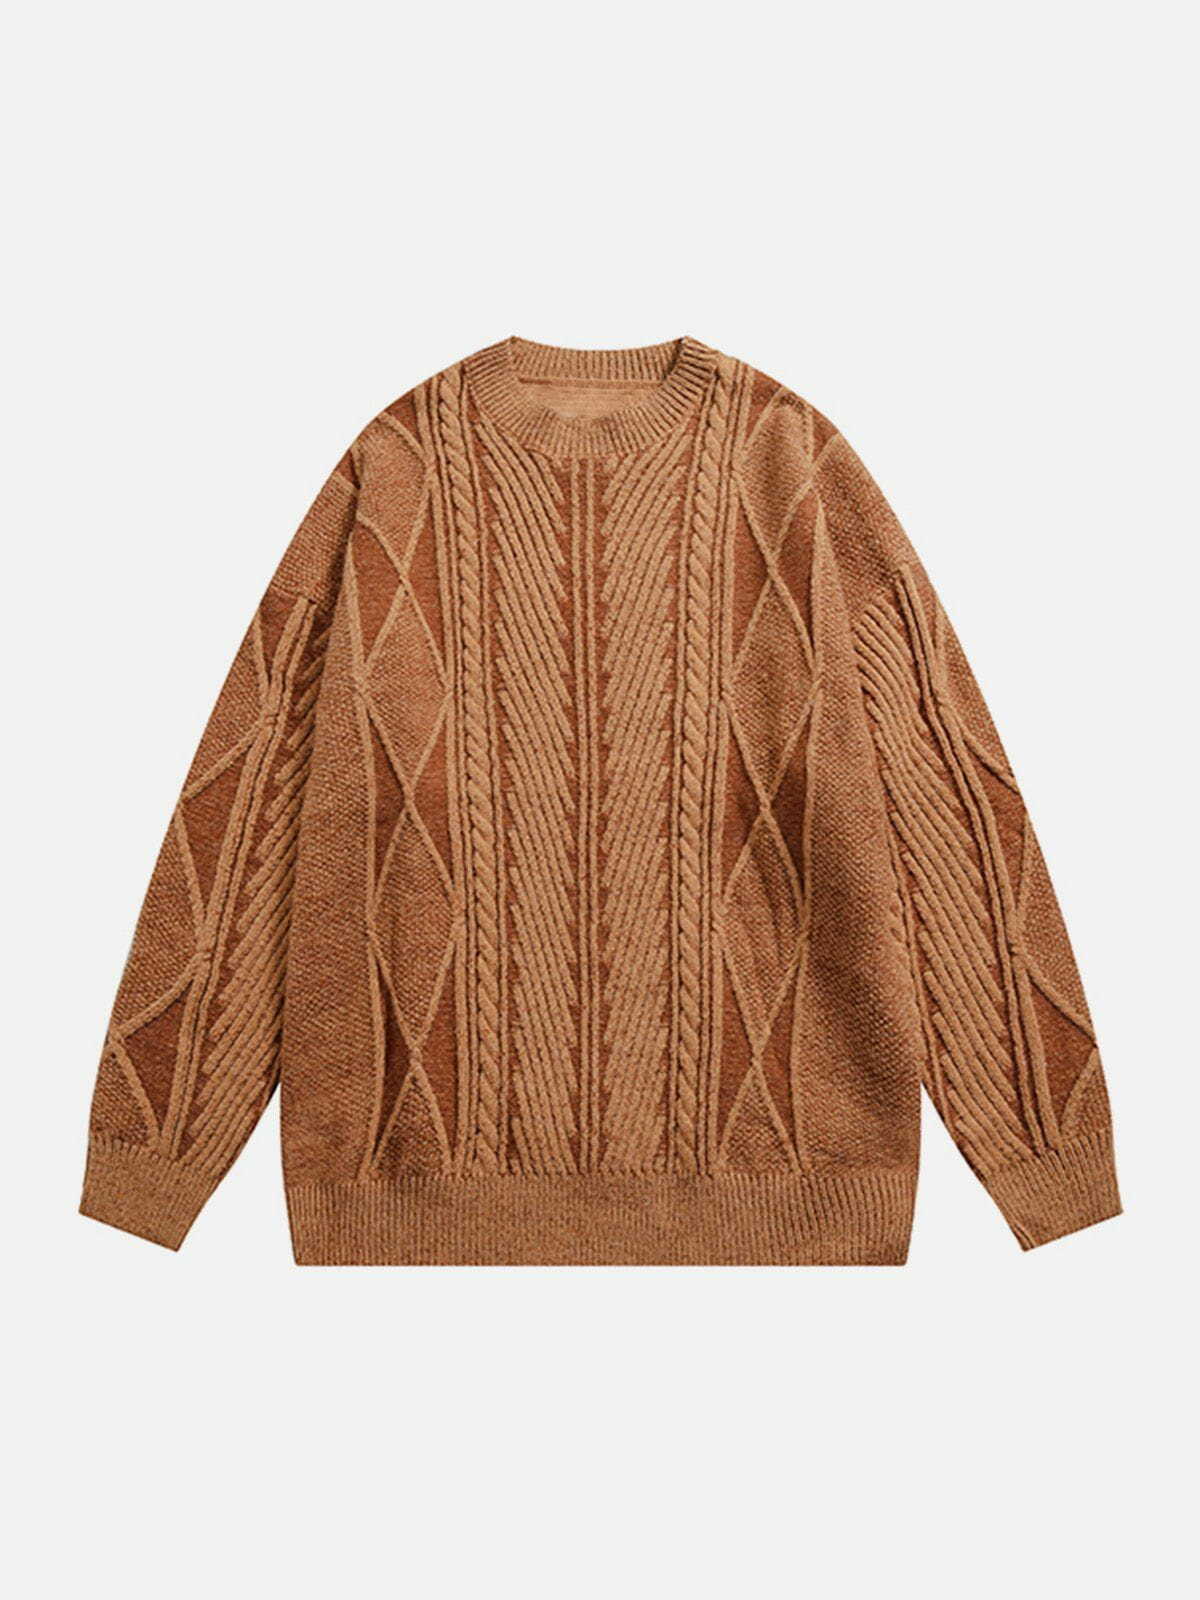 knit rhombus sweater retro & edgy urban fashion 3503